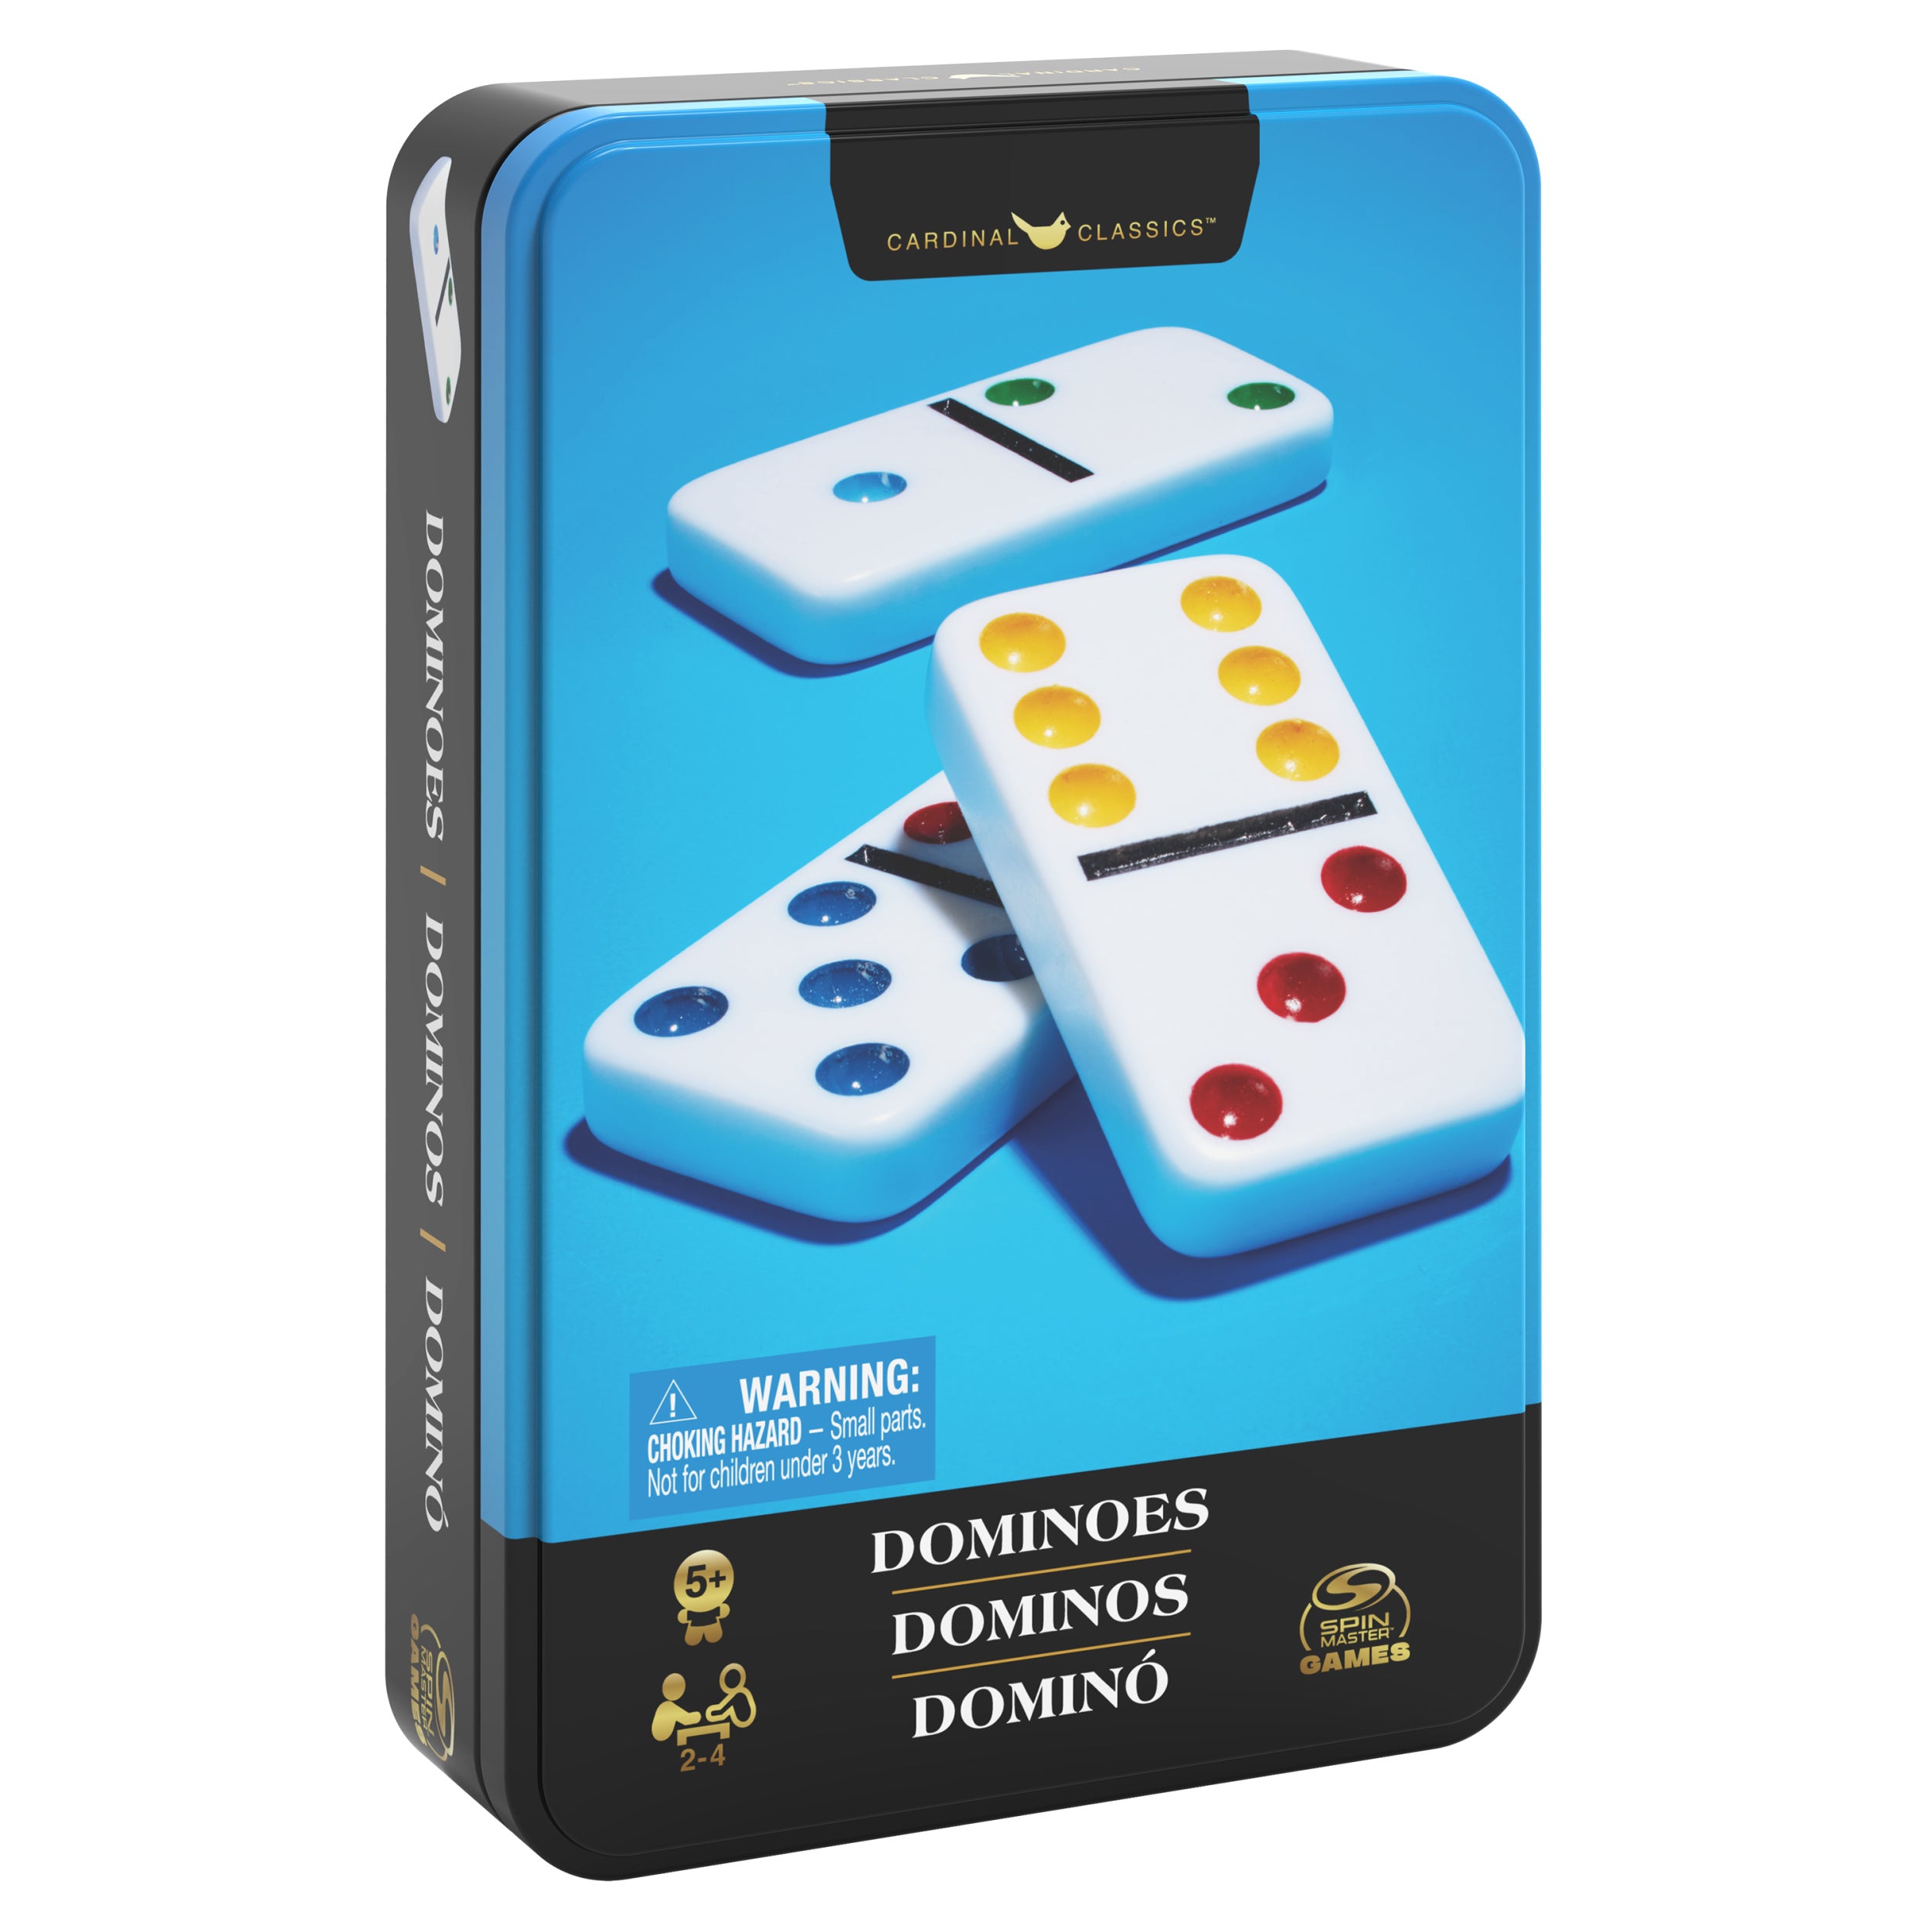 Cardinal: Classics - Domino Doble 6